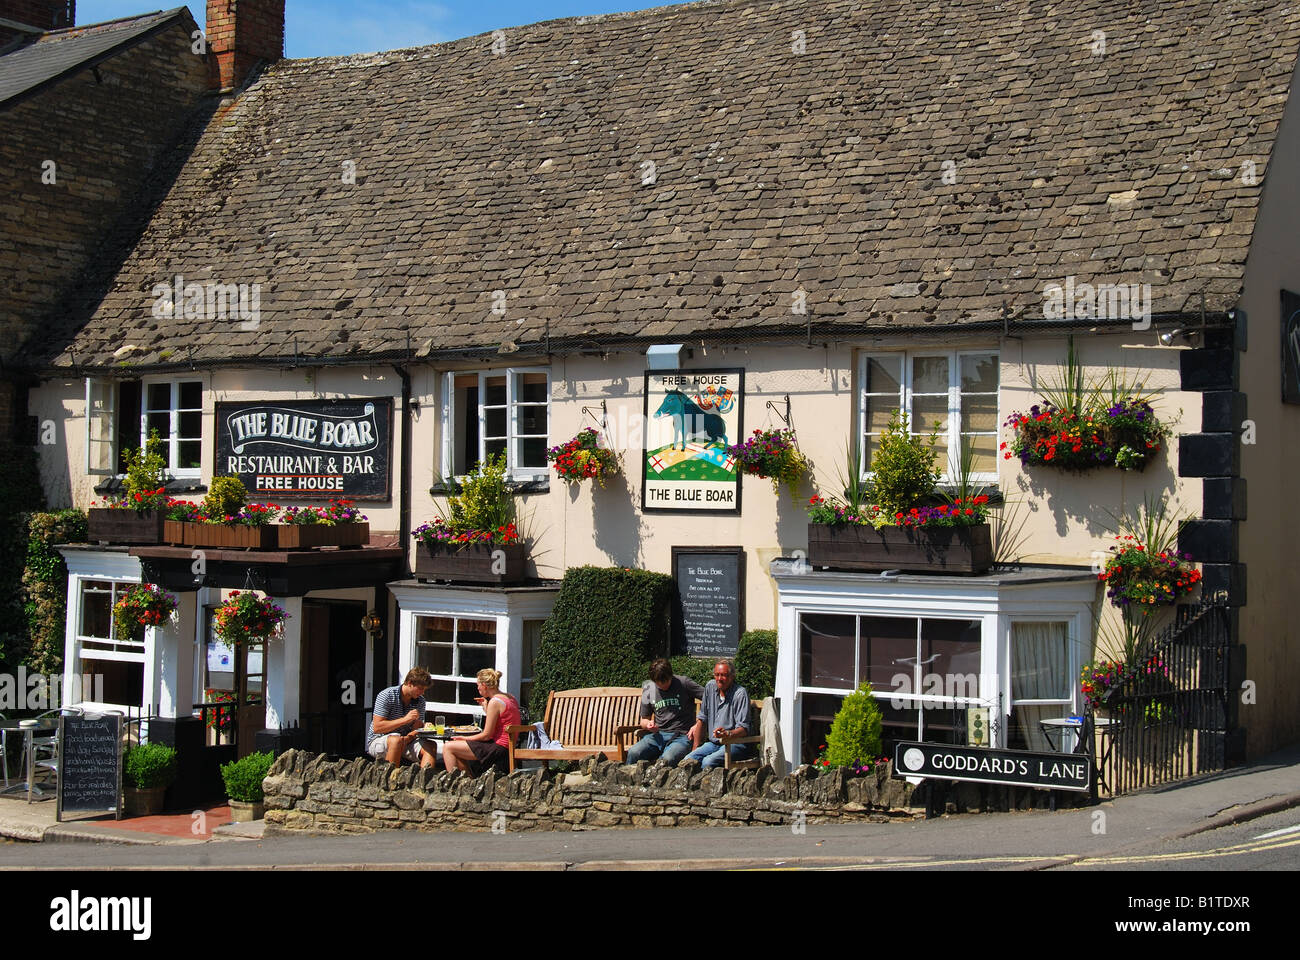 The Blue Boar Inn, Goddards Lane, Chipping Norton, Oxfordshire, England, United Kingdom Stock Photo